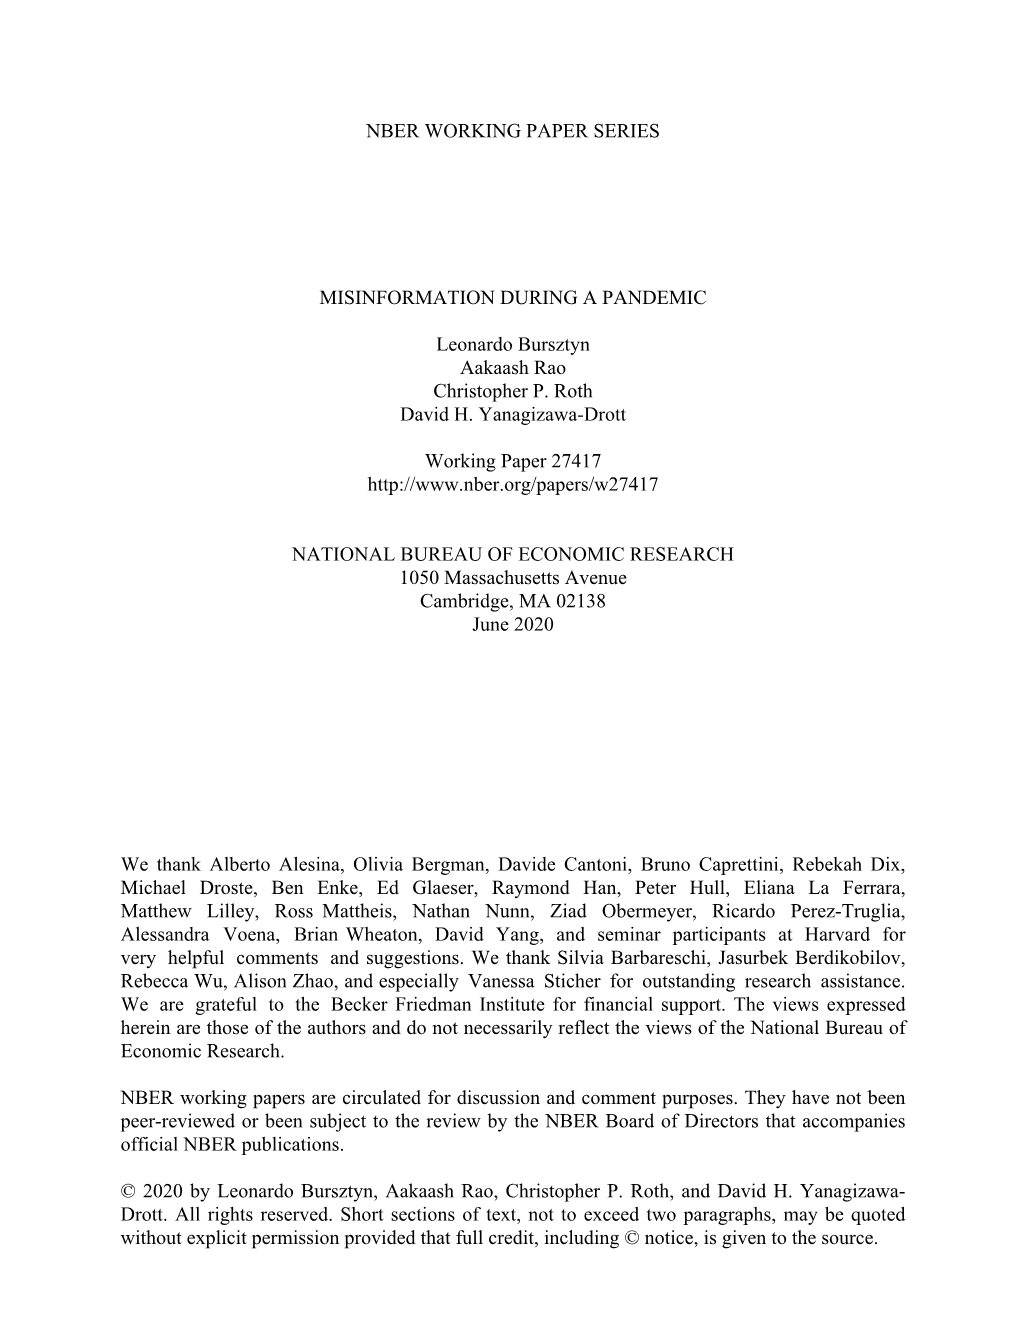 NBER WORKING PAPER SERIES MISINFORMATION DURING a PANDEMIC Leonardo Bursztyn Aakaash Rao Christopher P. Roth David H. Yanagizawa